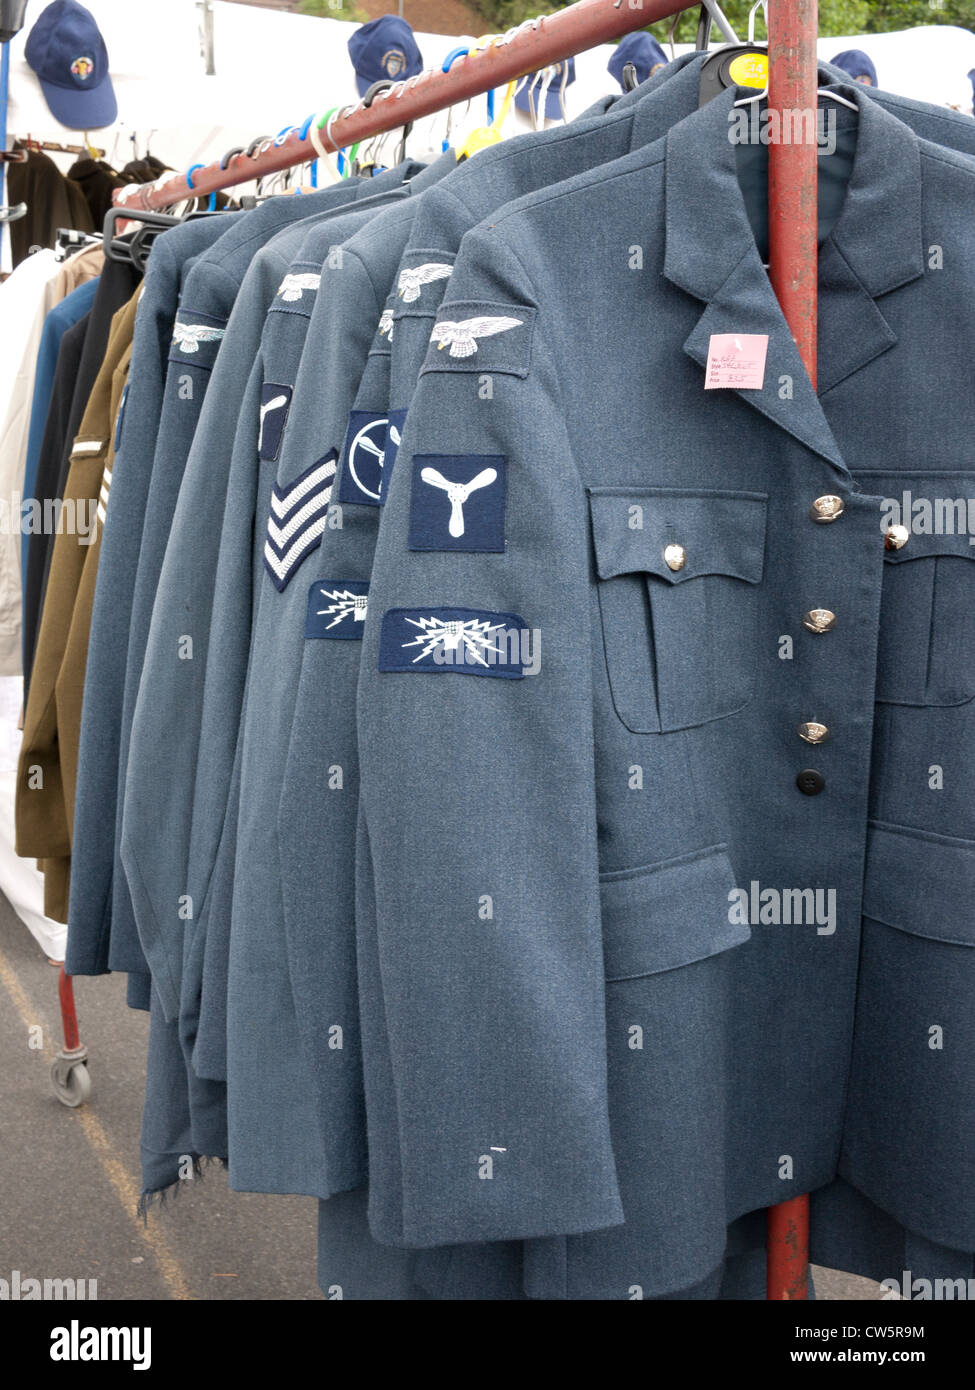 Old RAF Uniforms for sale on rack, England,UK Stock Photo - Alamy